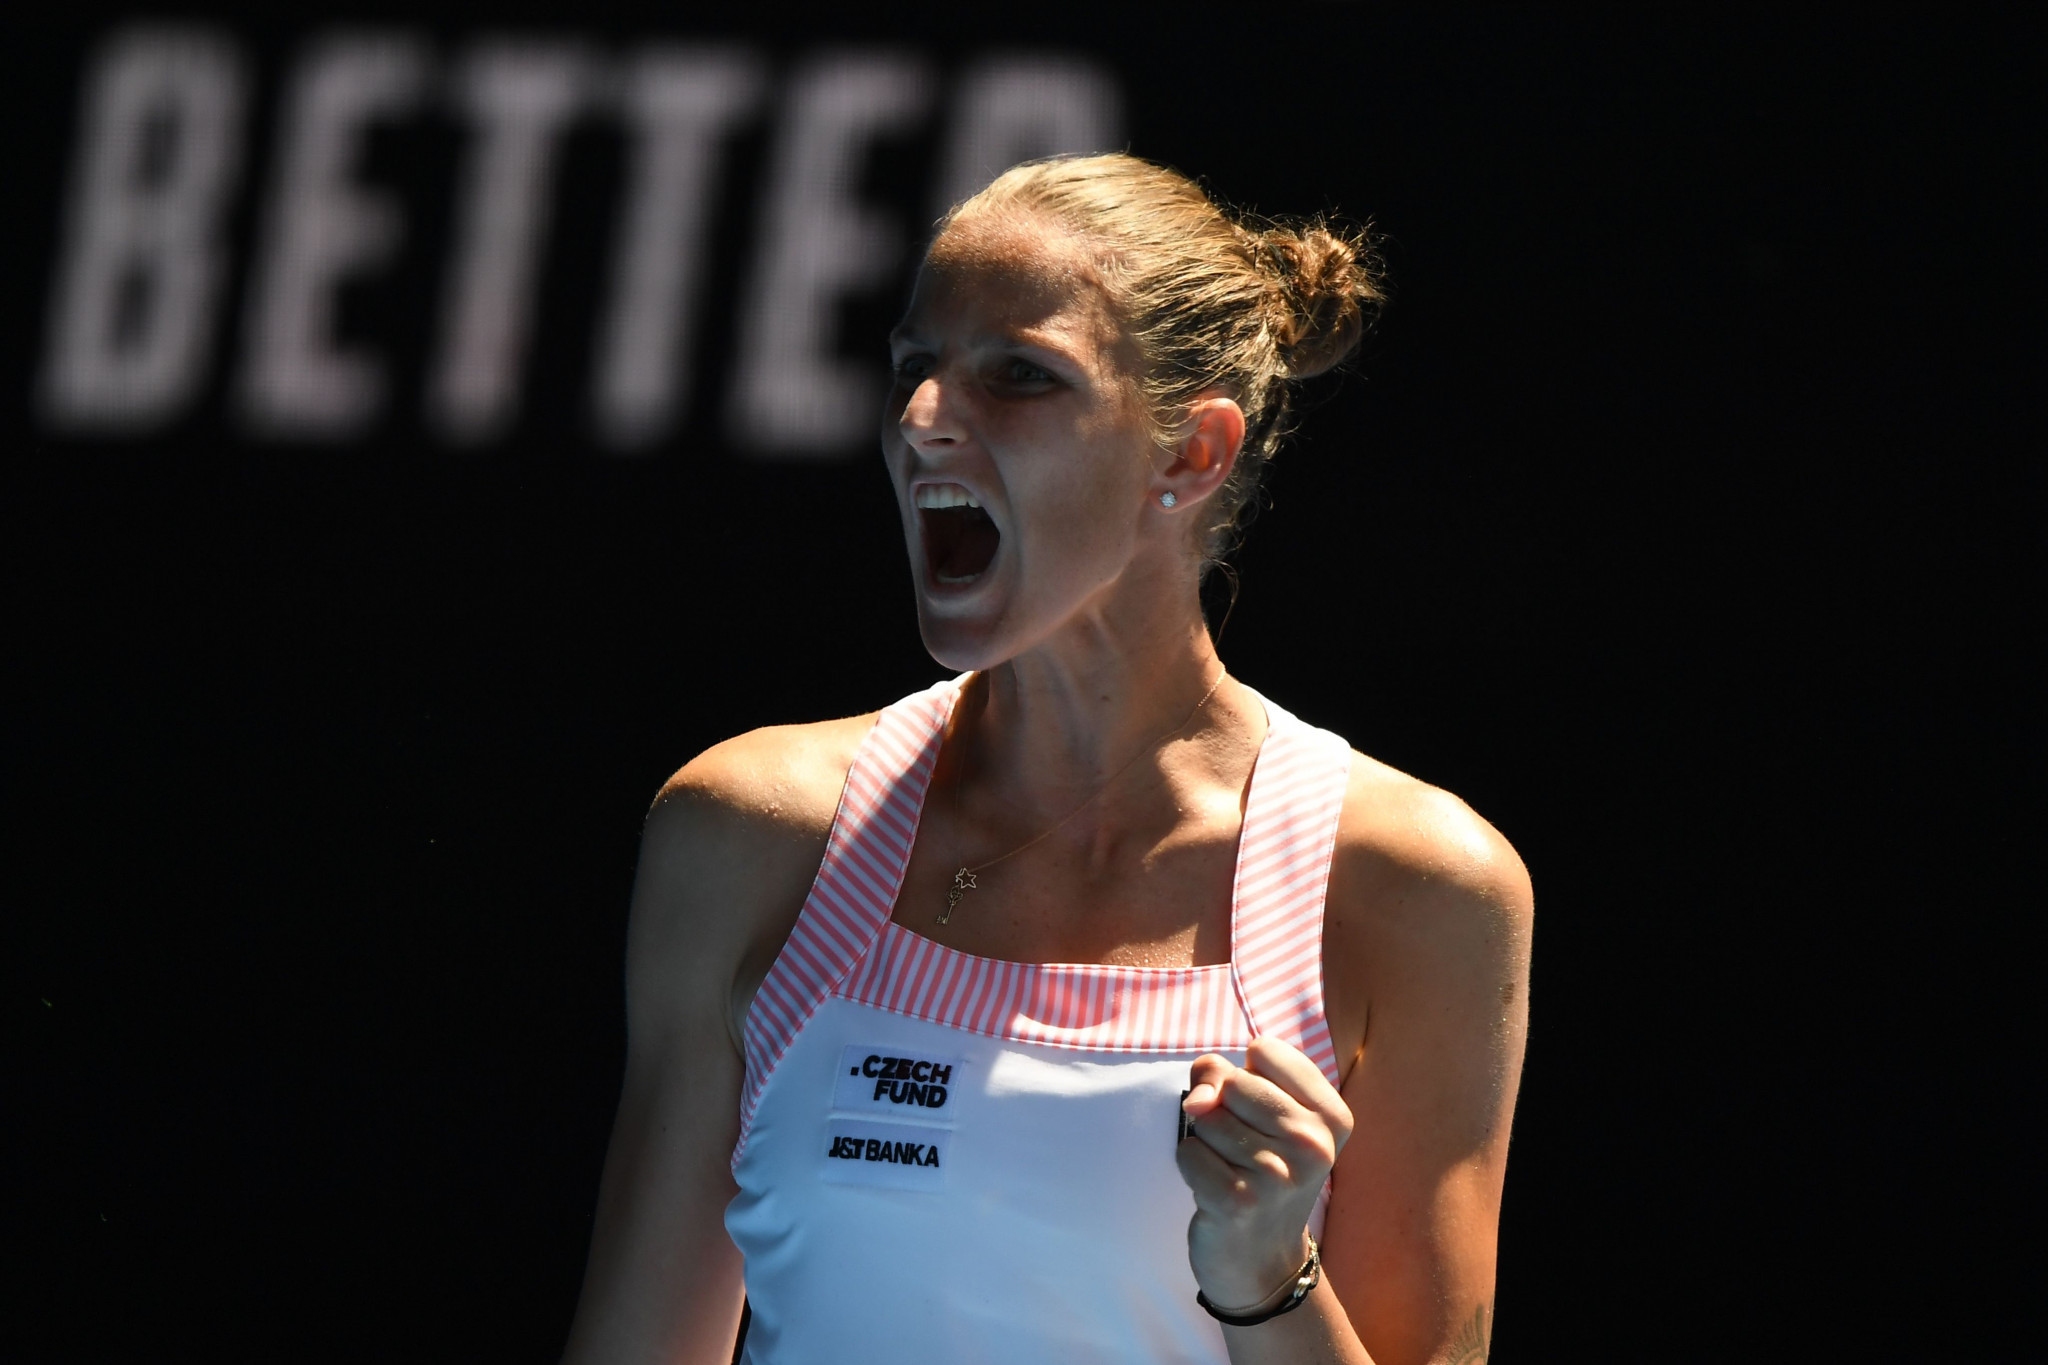 Plíšková beats Williams as Djokovic progresses after Nishikori retirement at Australian Open